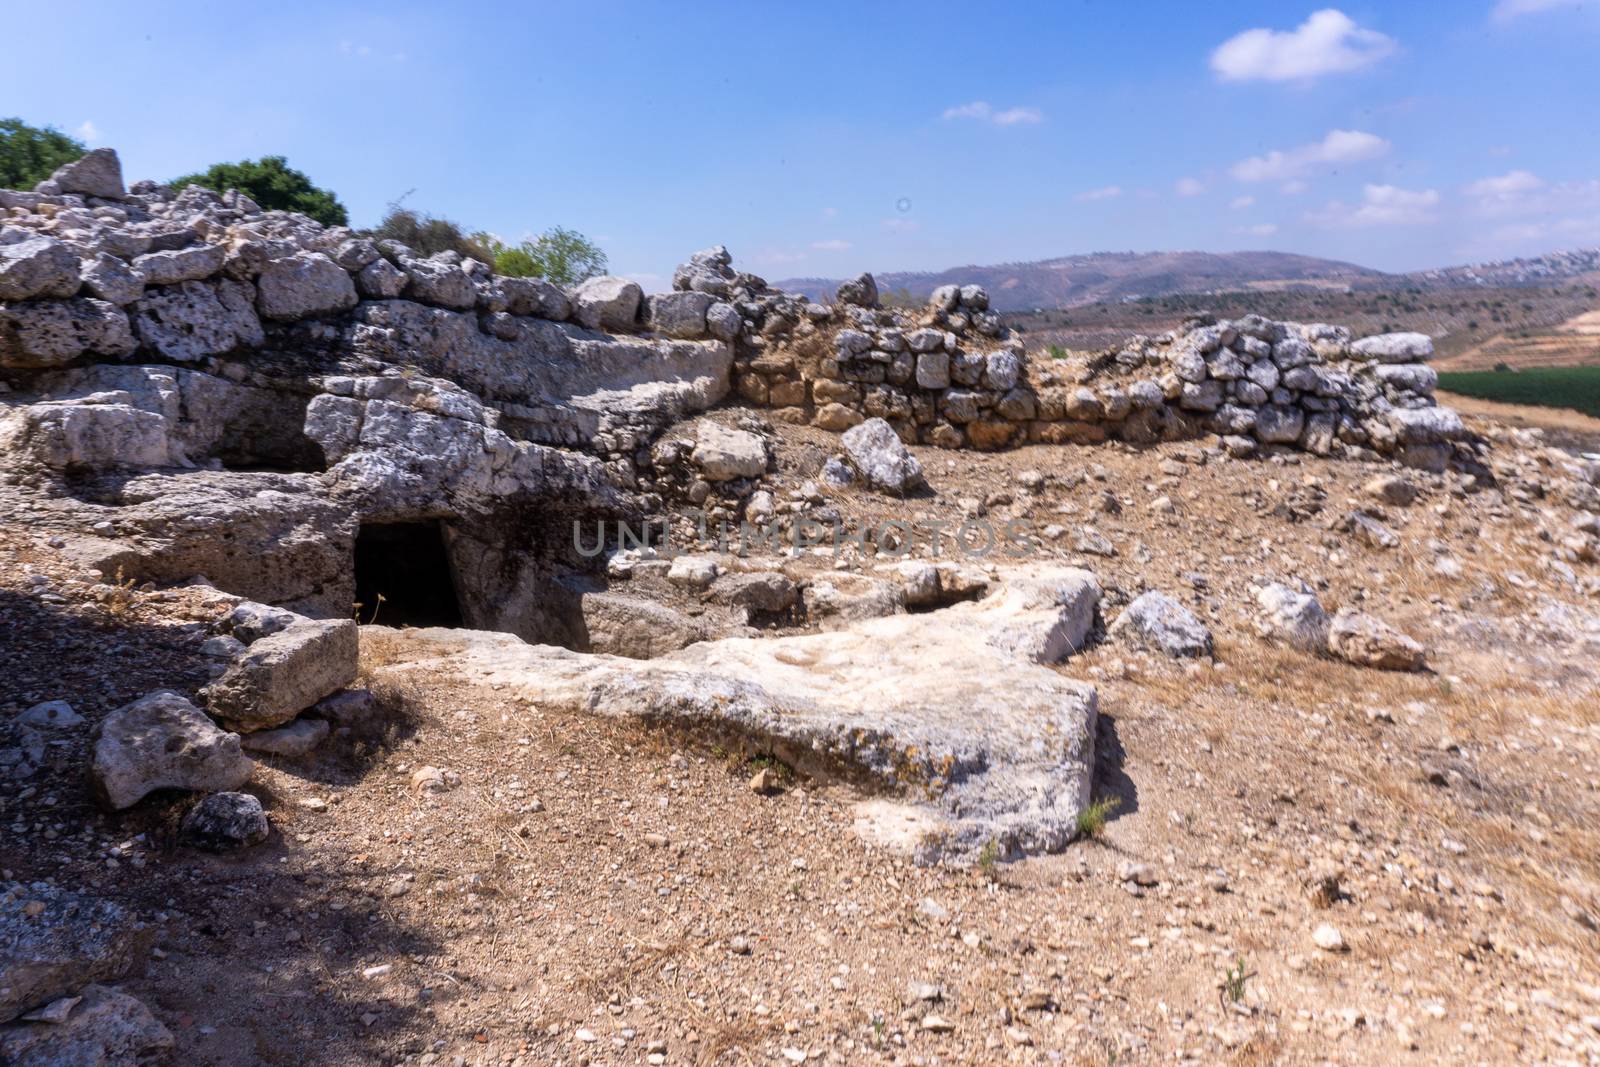 Biblical Shiloh ruins of historic town in Samaria